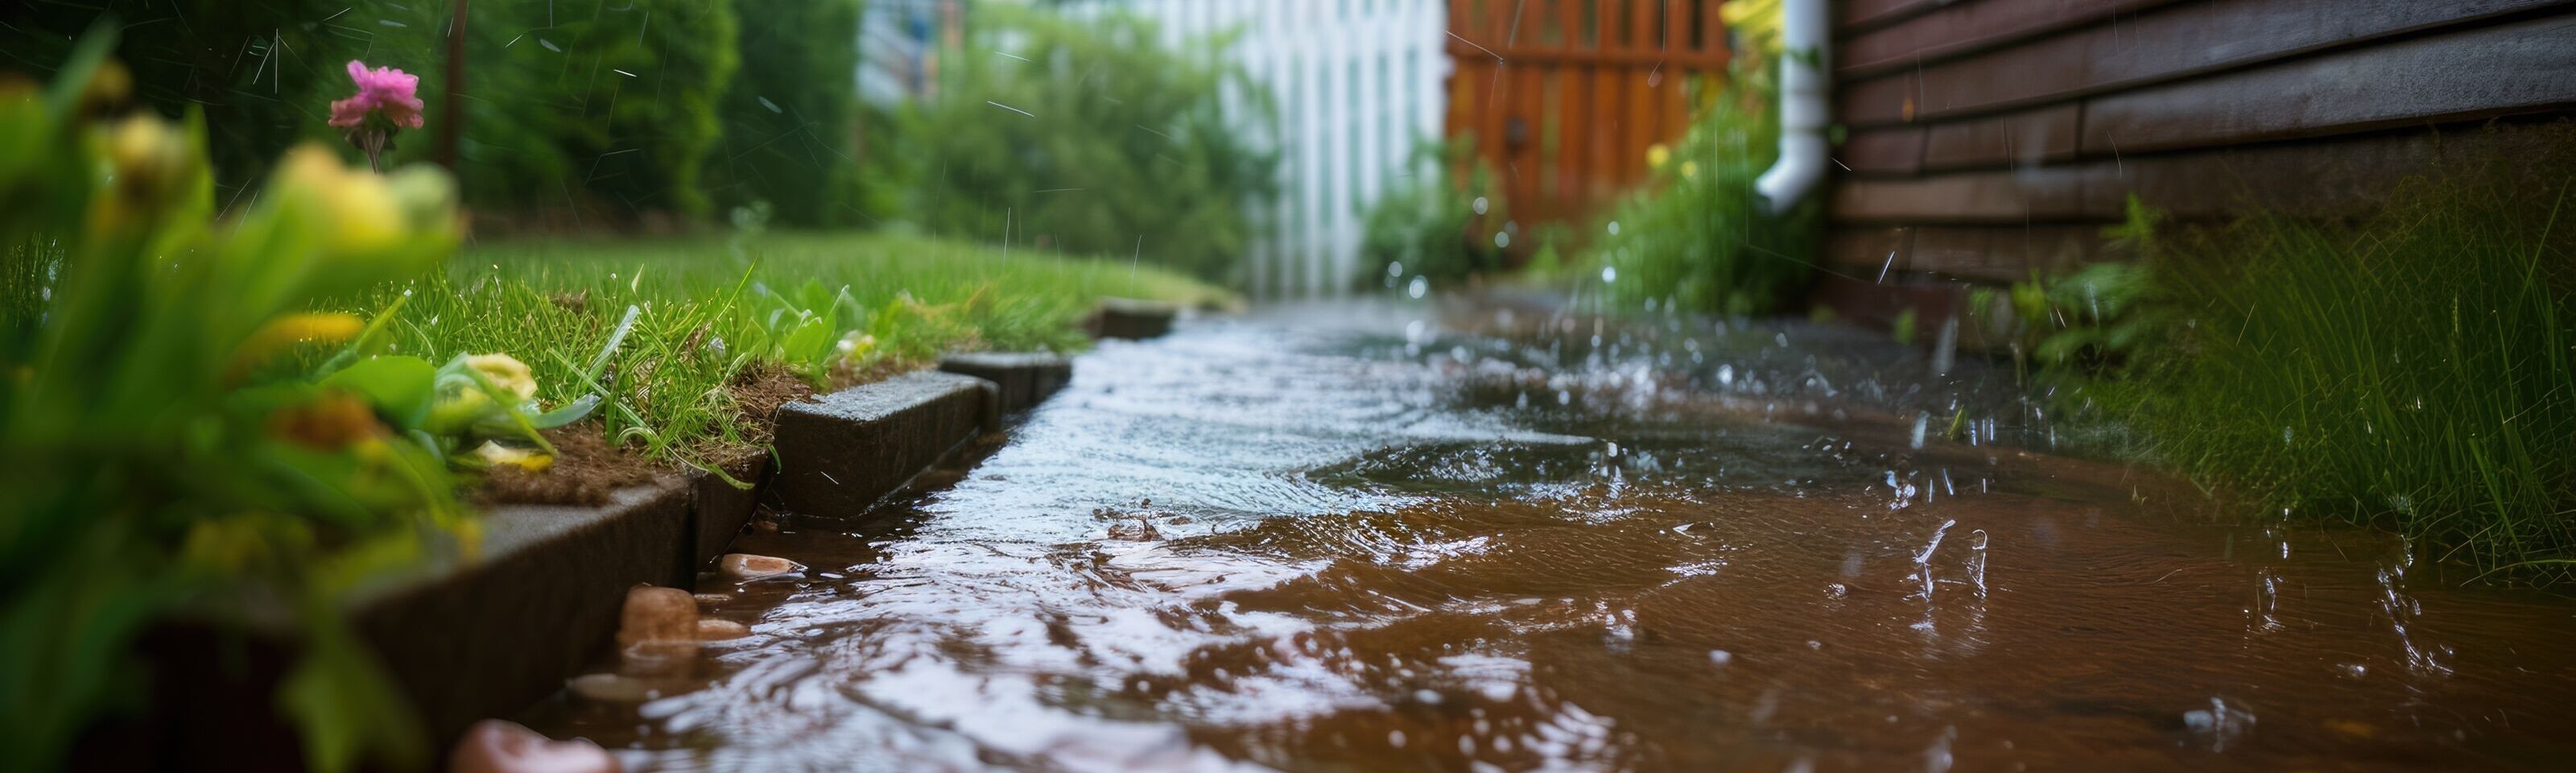 Drainage Channels: Rain, Rain, Go Away!